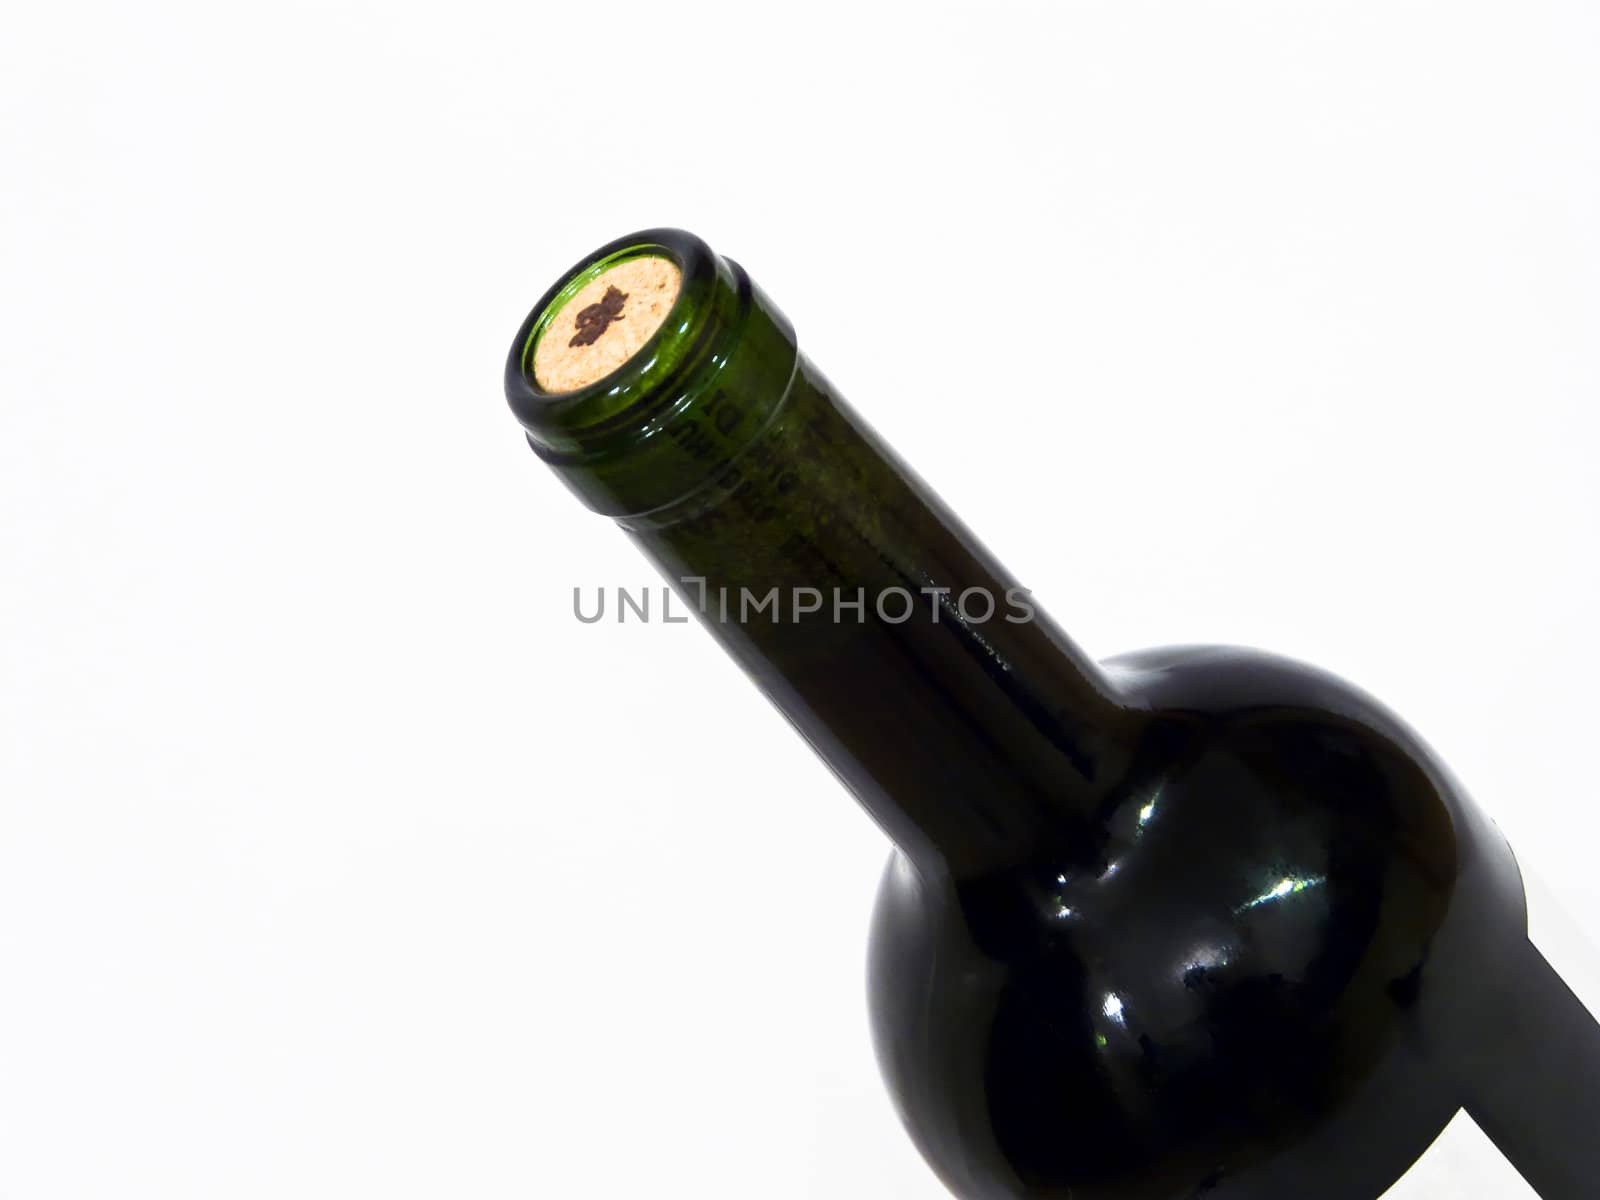 Neck of wine bottle